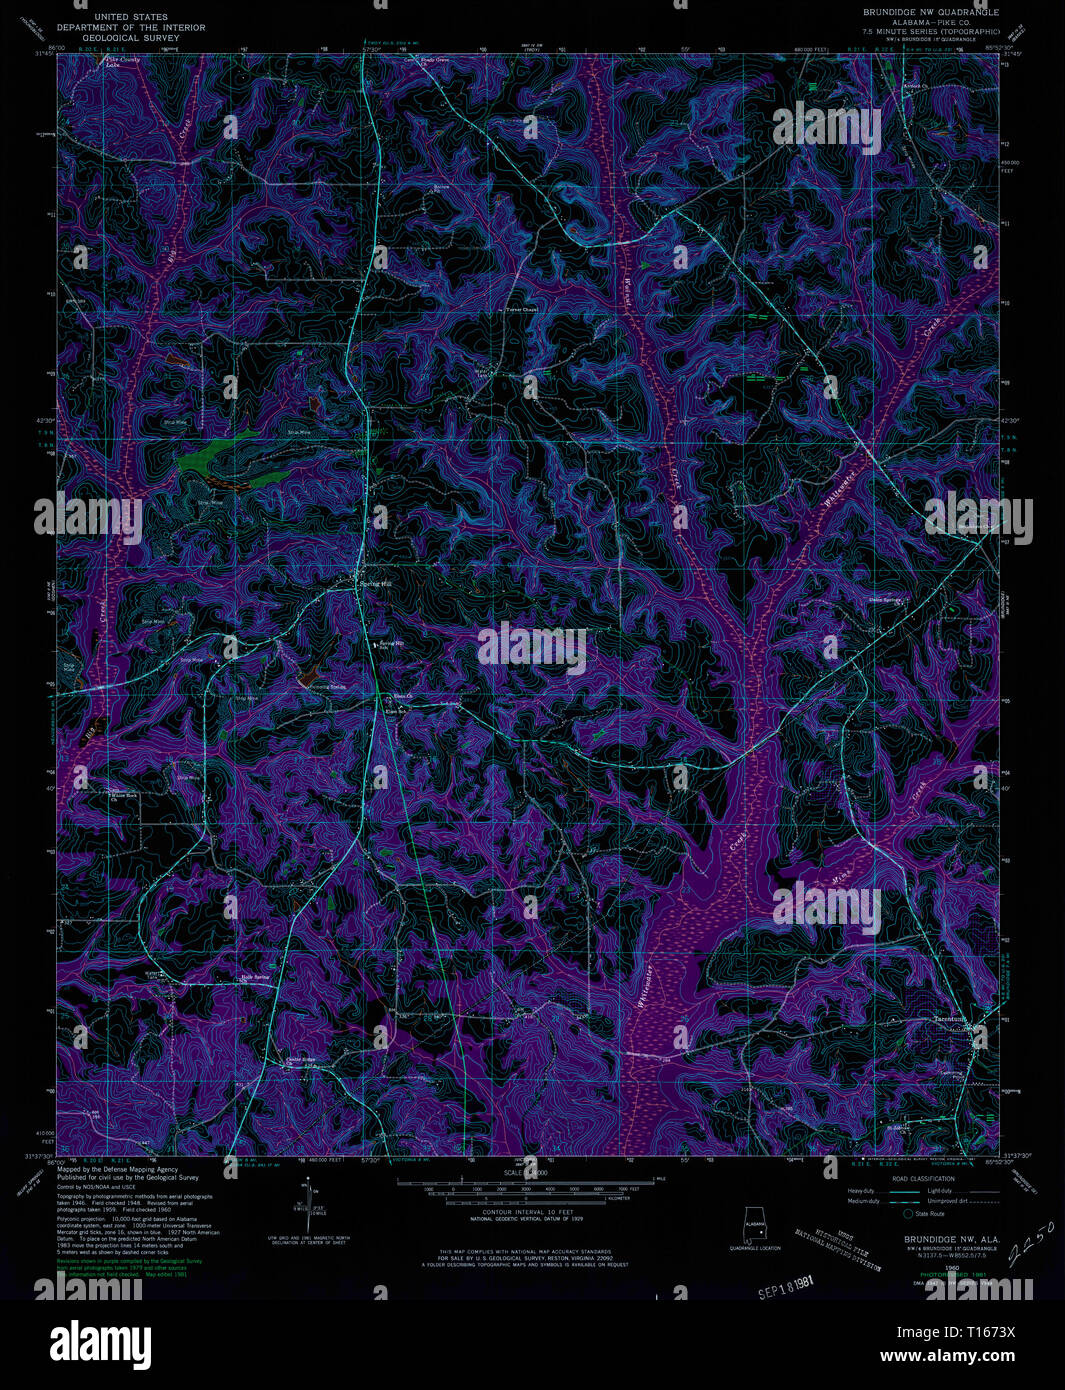 USGS TOPO Map Alabama AL Brundidge NW 303364 1960 24000 Inverted Stock Photo